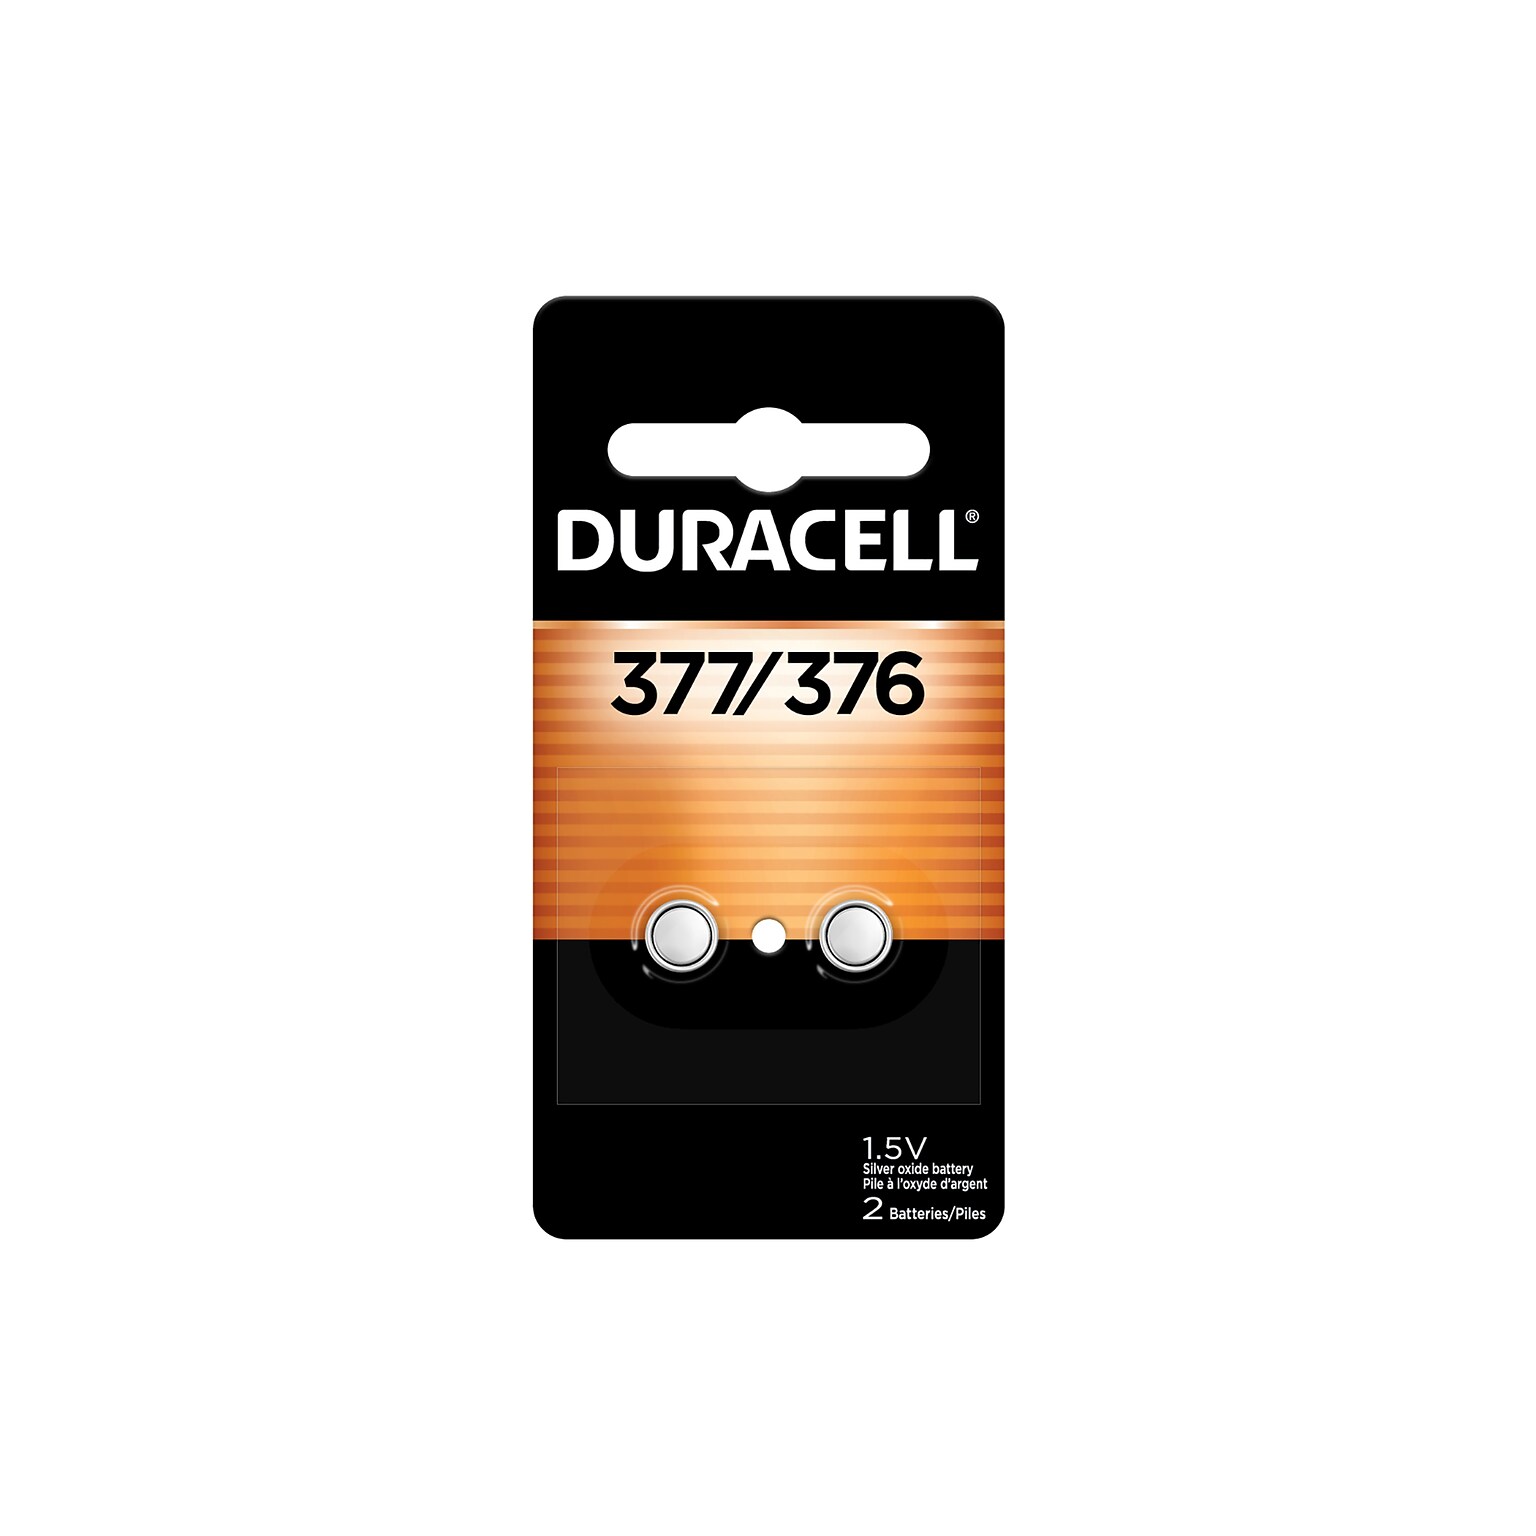 Duracell 377 Silver Oxide Battery, 2/Pack (DU377/376-2PK)